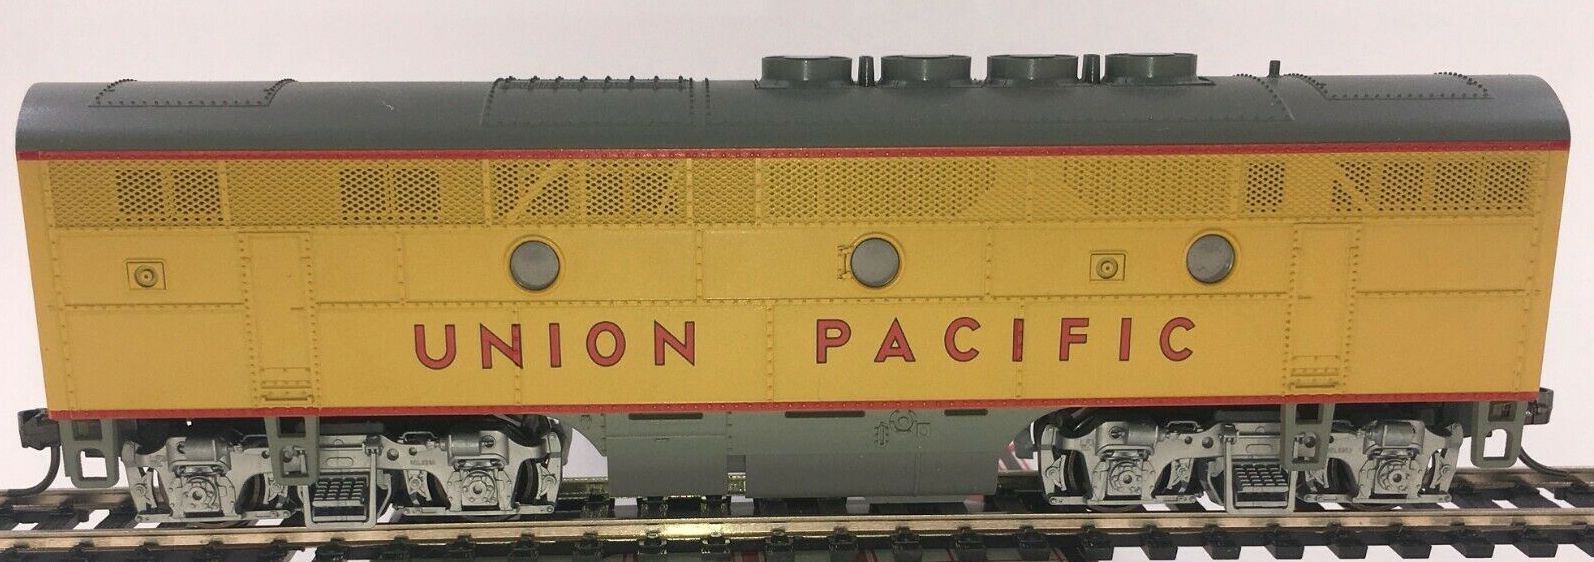 Stewart 691-8511 HO Scale F7BPhII Diesel Kit Union Pacific No # - NOS